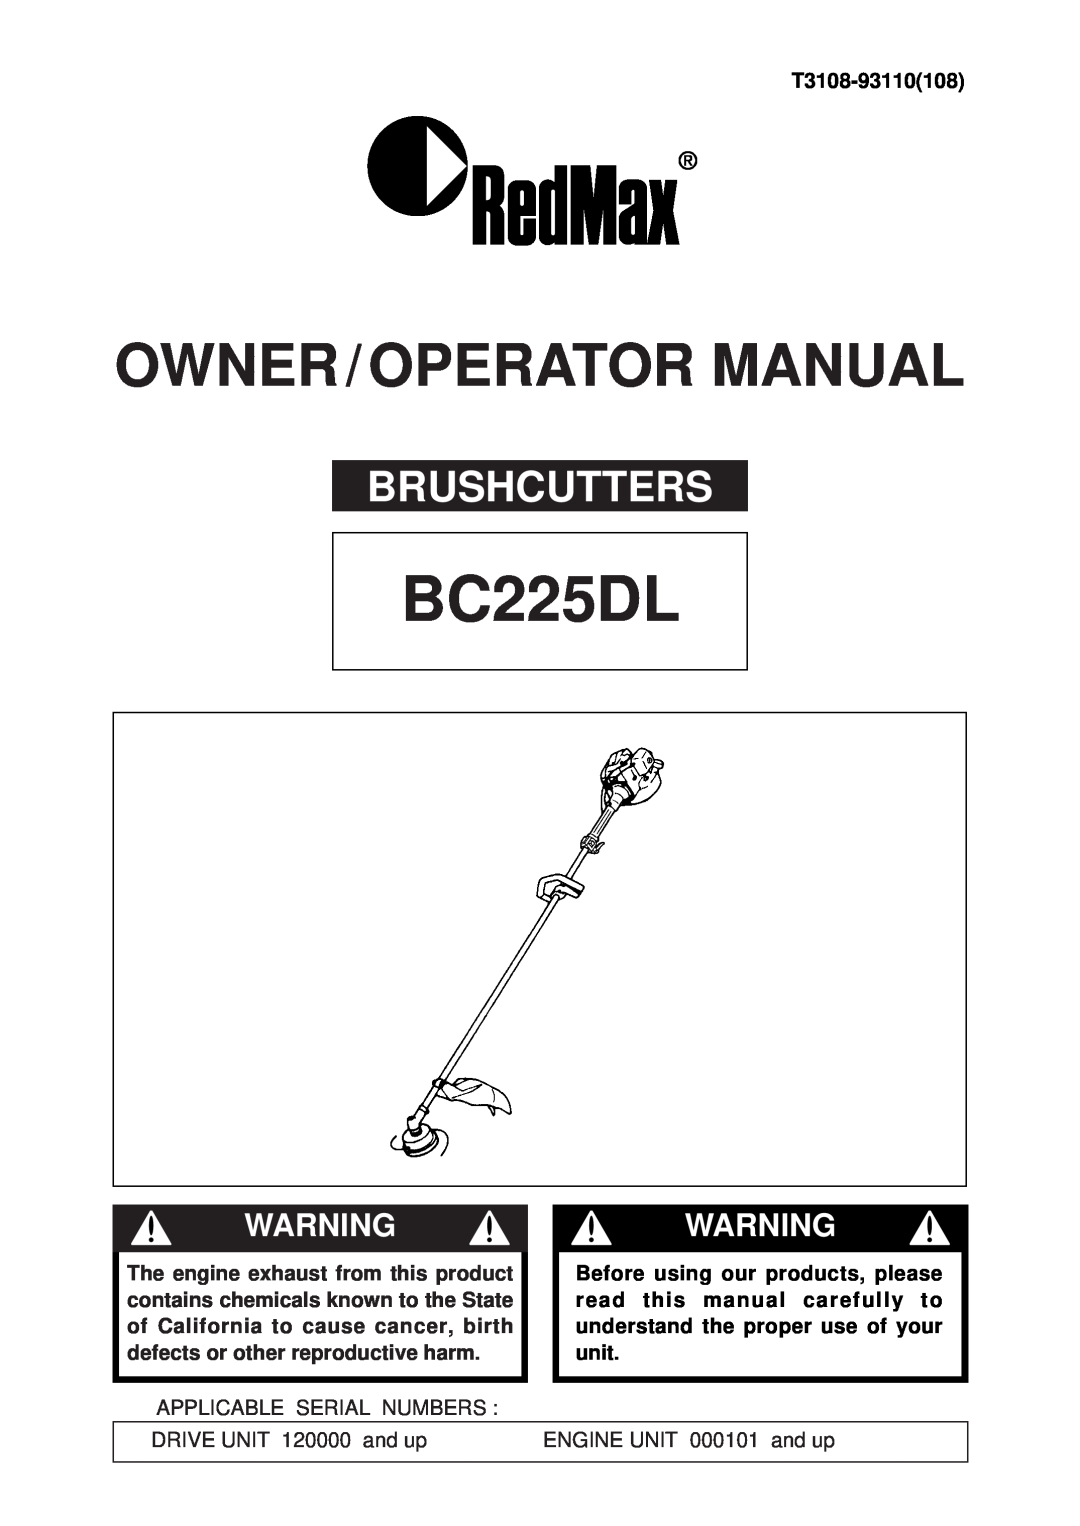 RedMax BC225DL manual Brushcutters, Owner / Operator Manual, Warning Warning 